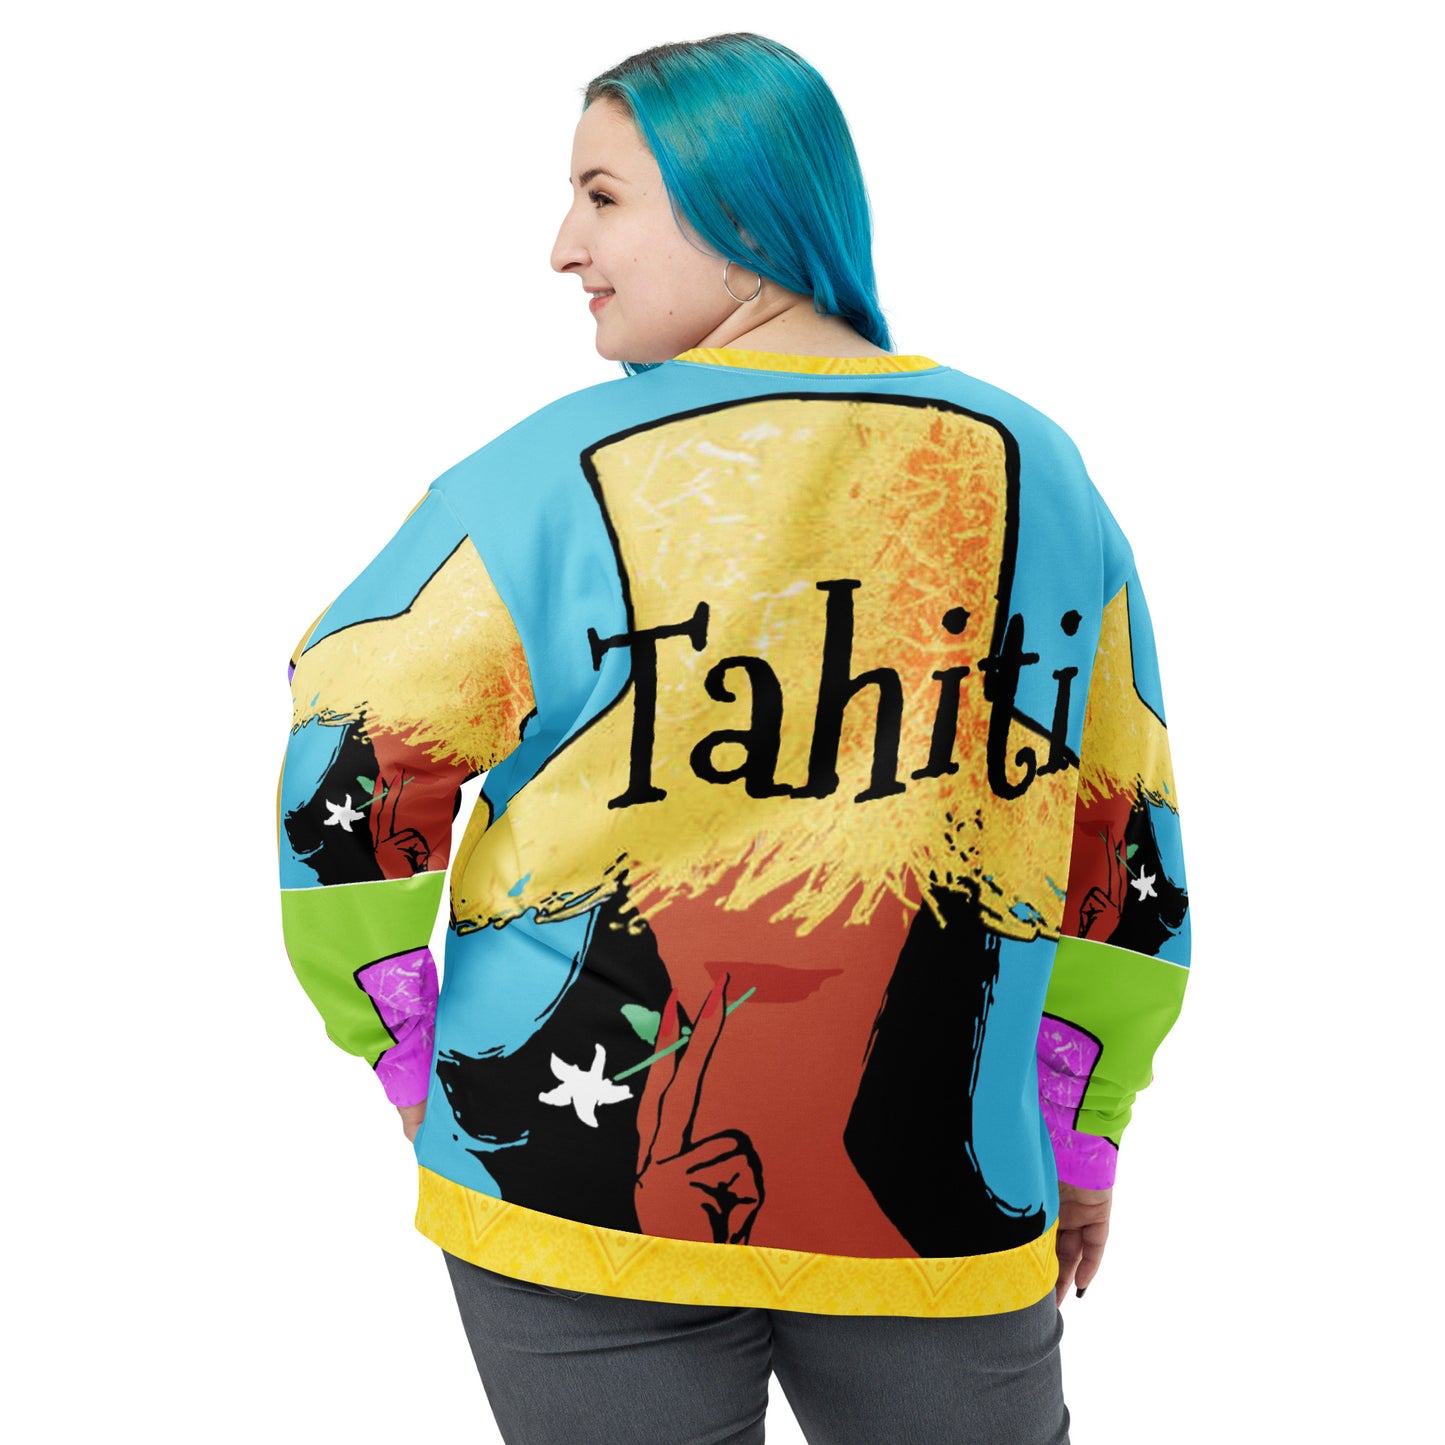 Tahiti Girl Party Sweatshirt